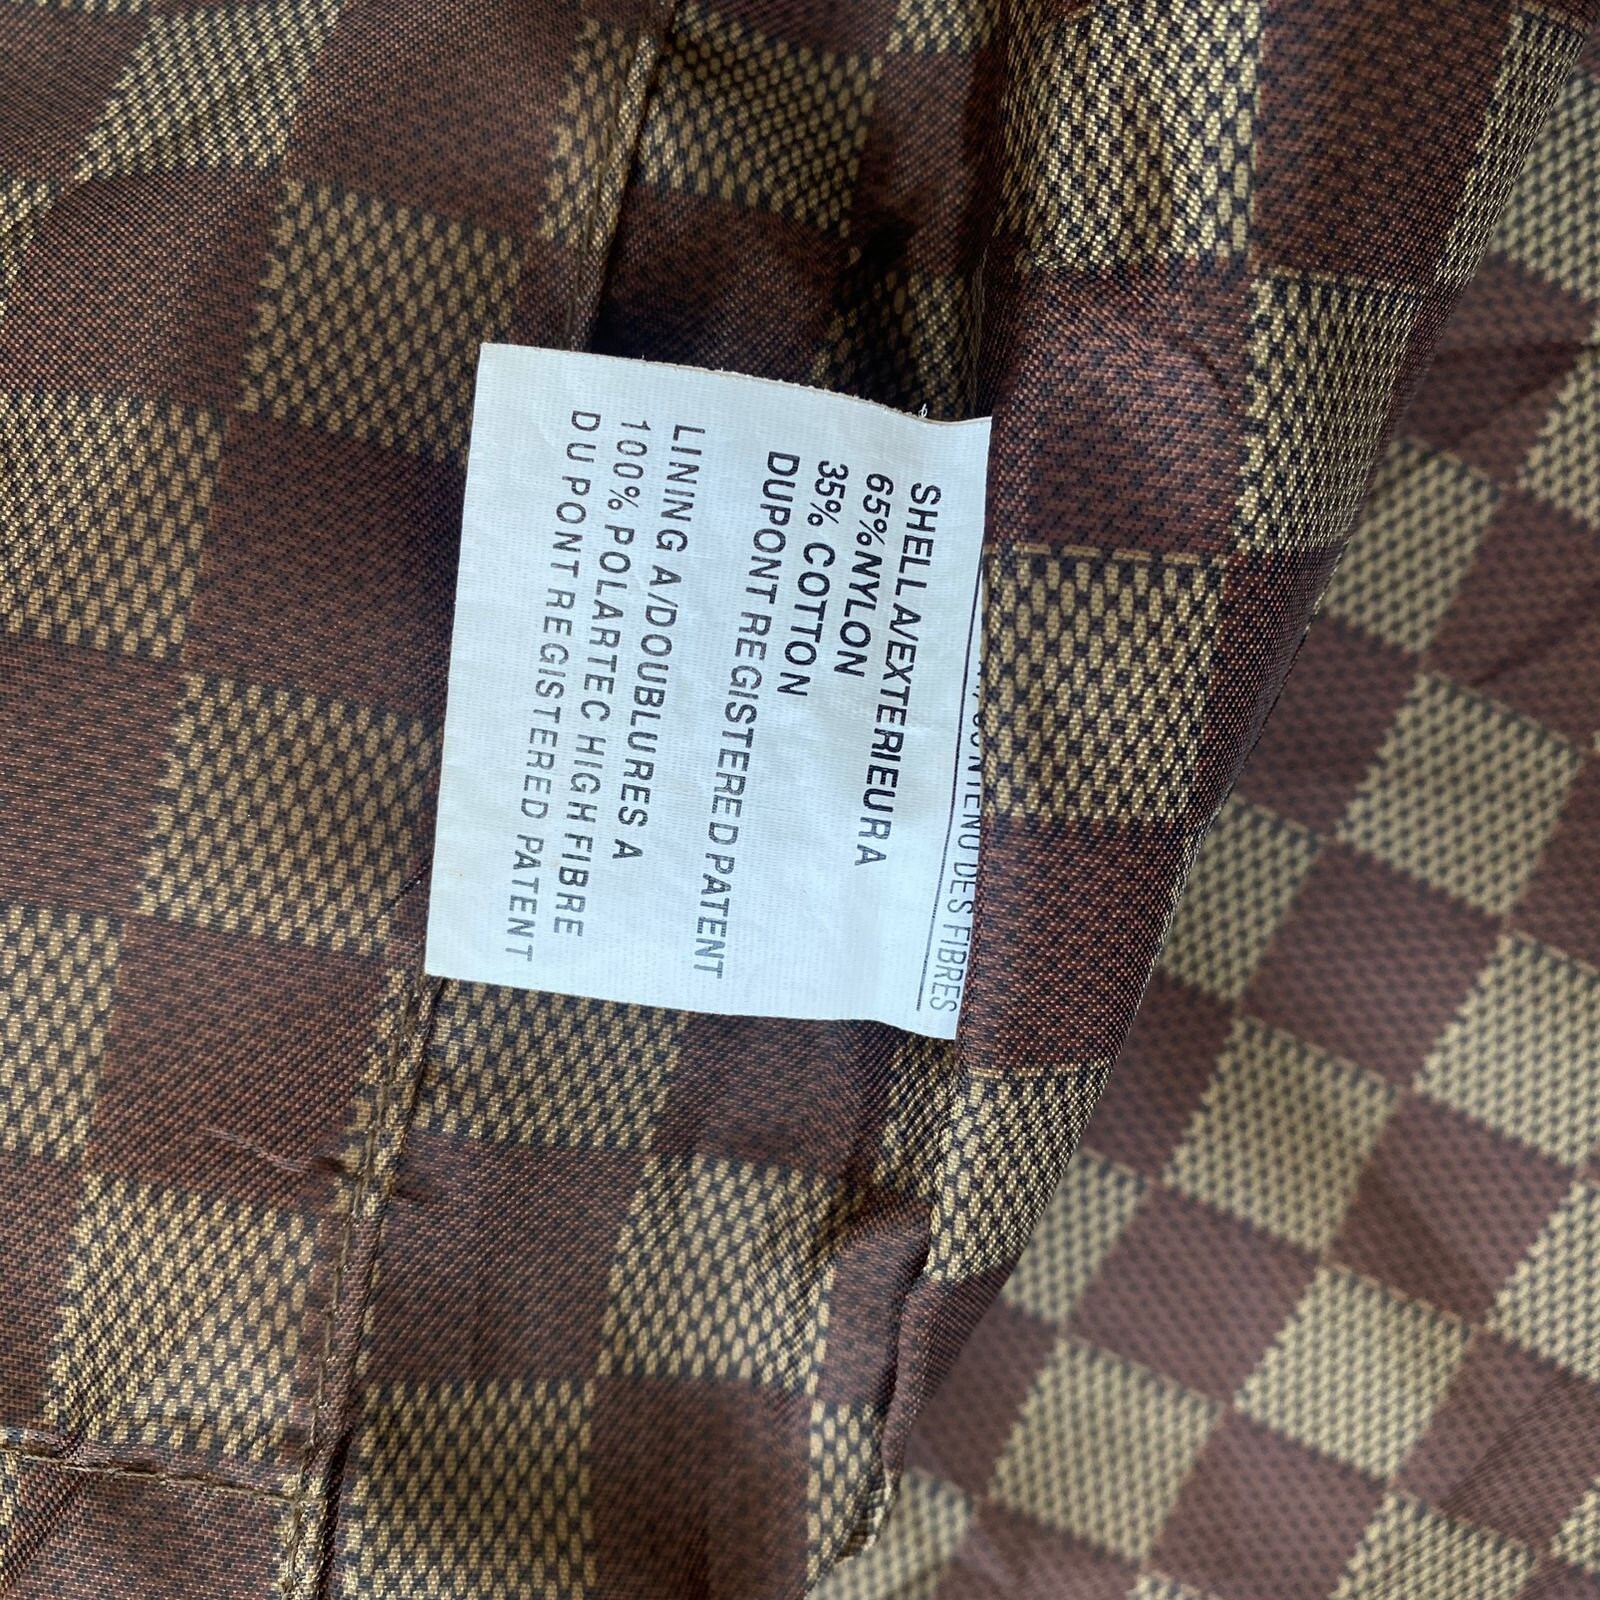 Vintage Louis Vuitton Monogram Inner Jacket 